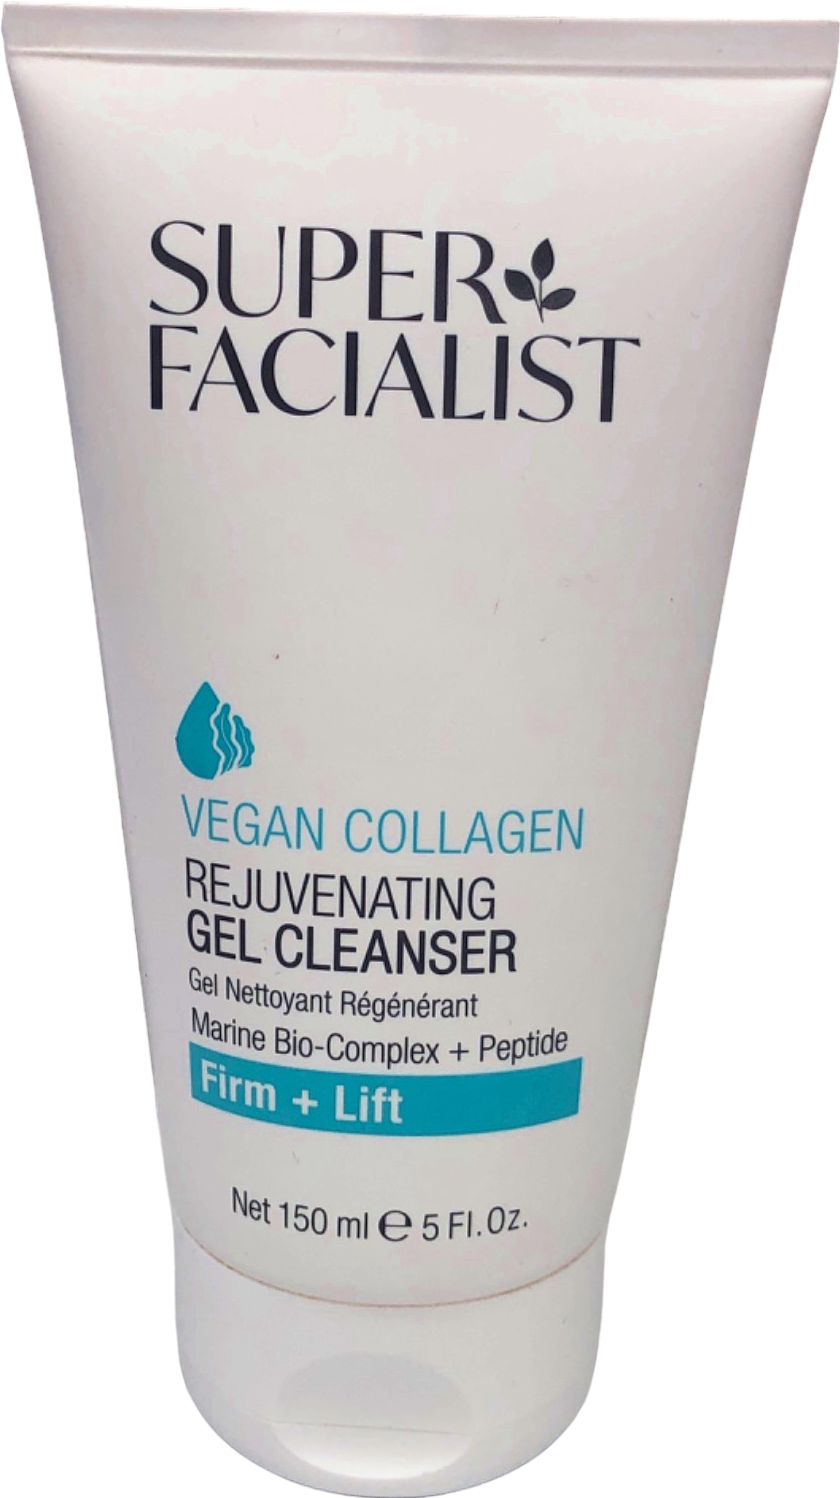 Super Facialist Vegan Collagen Rejuvenating Gel Cleanser 150 ml